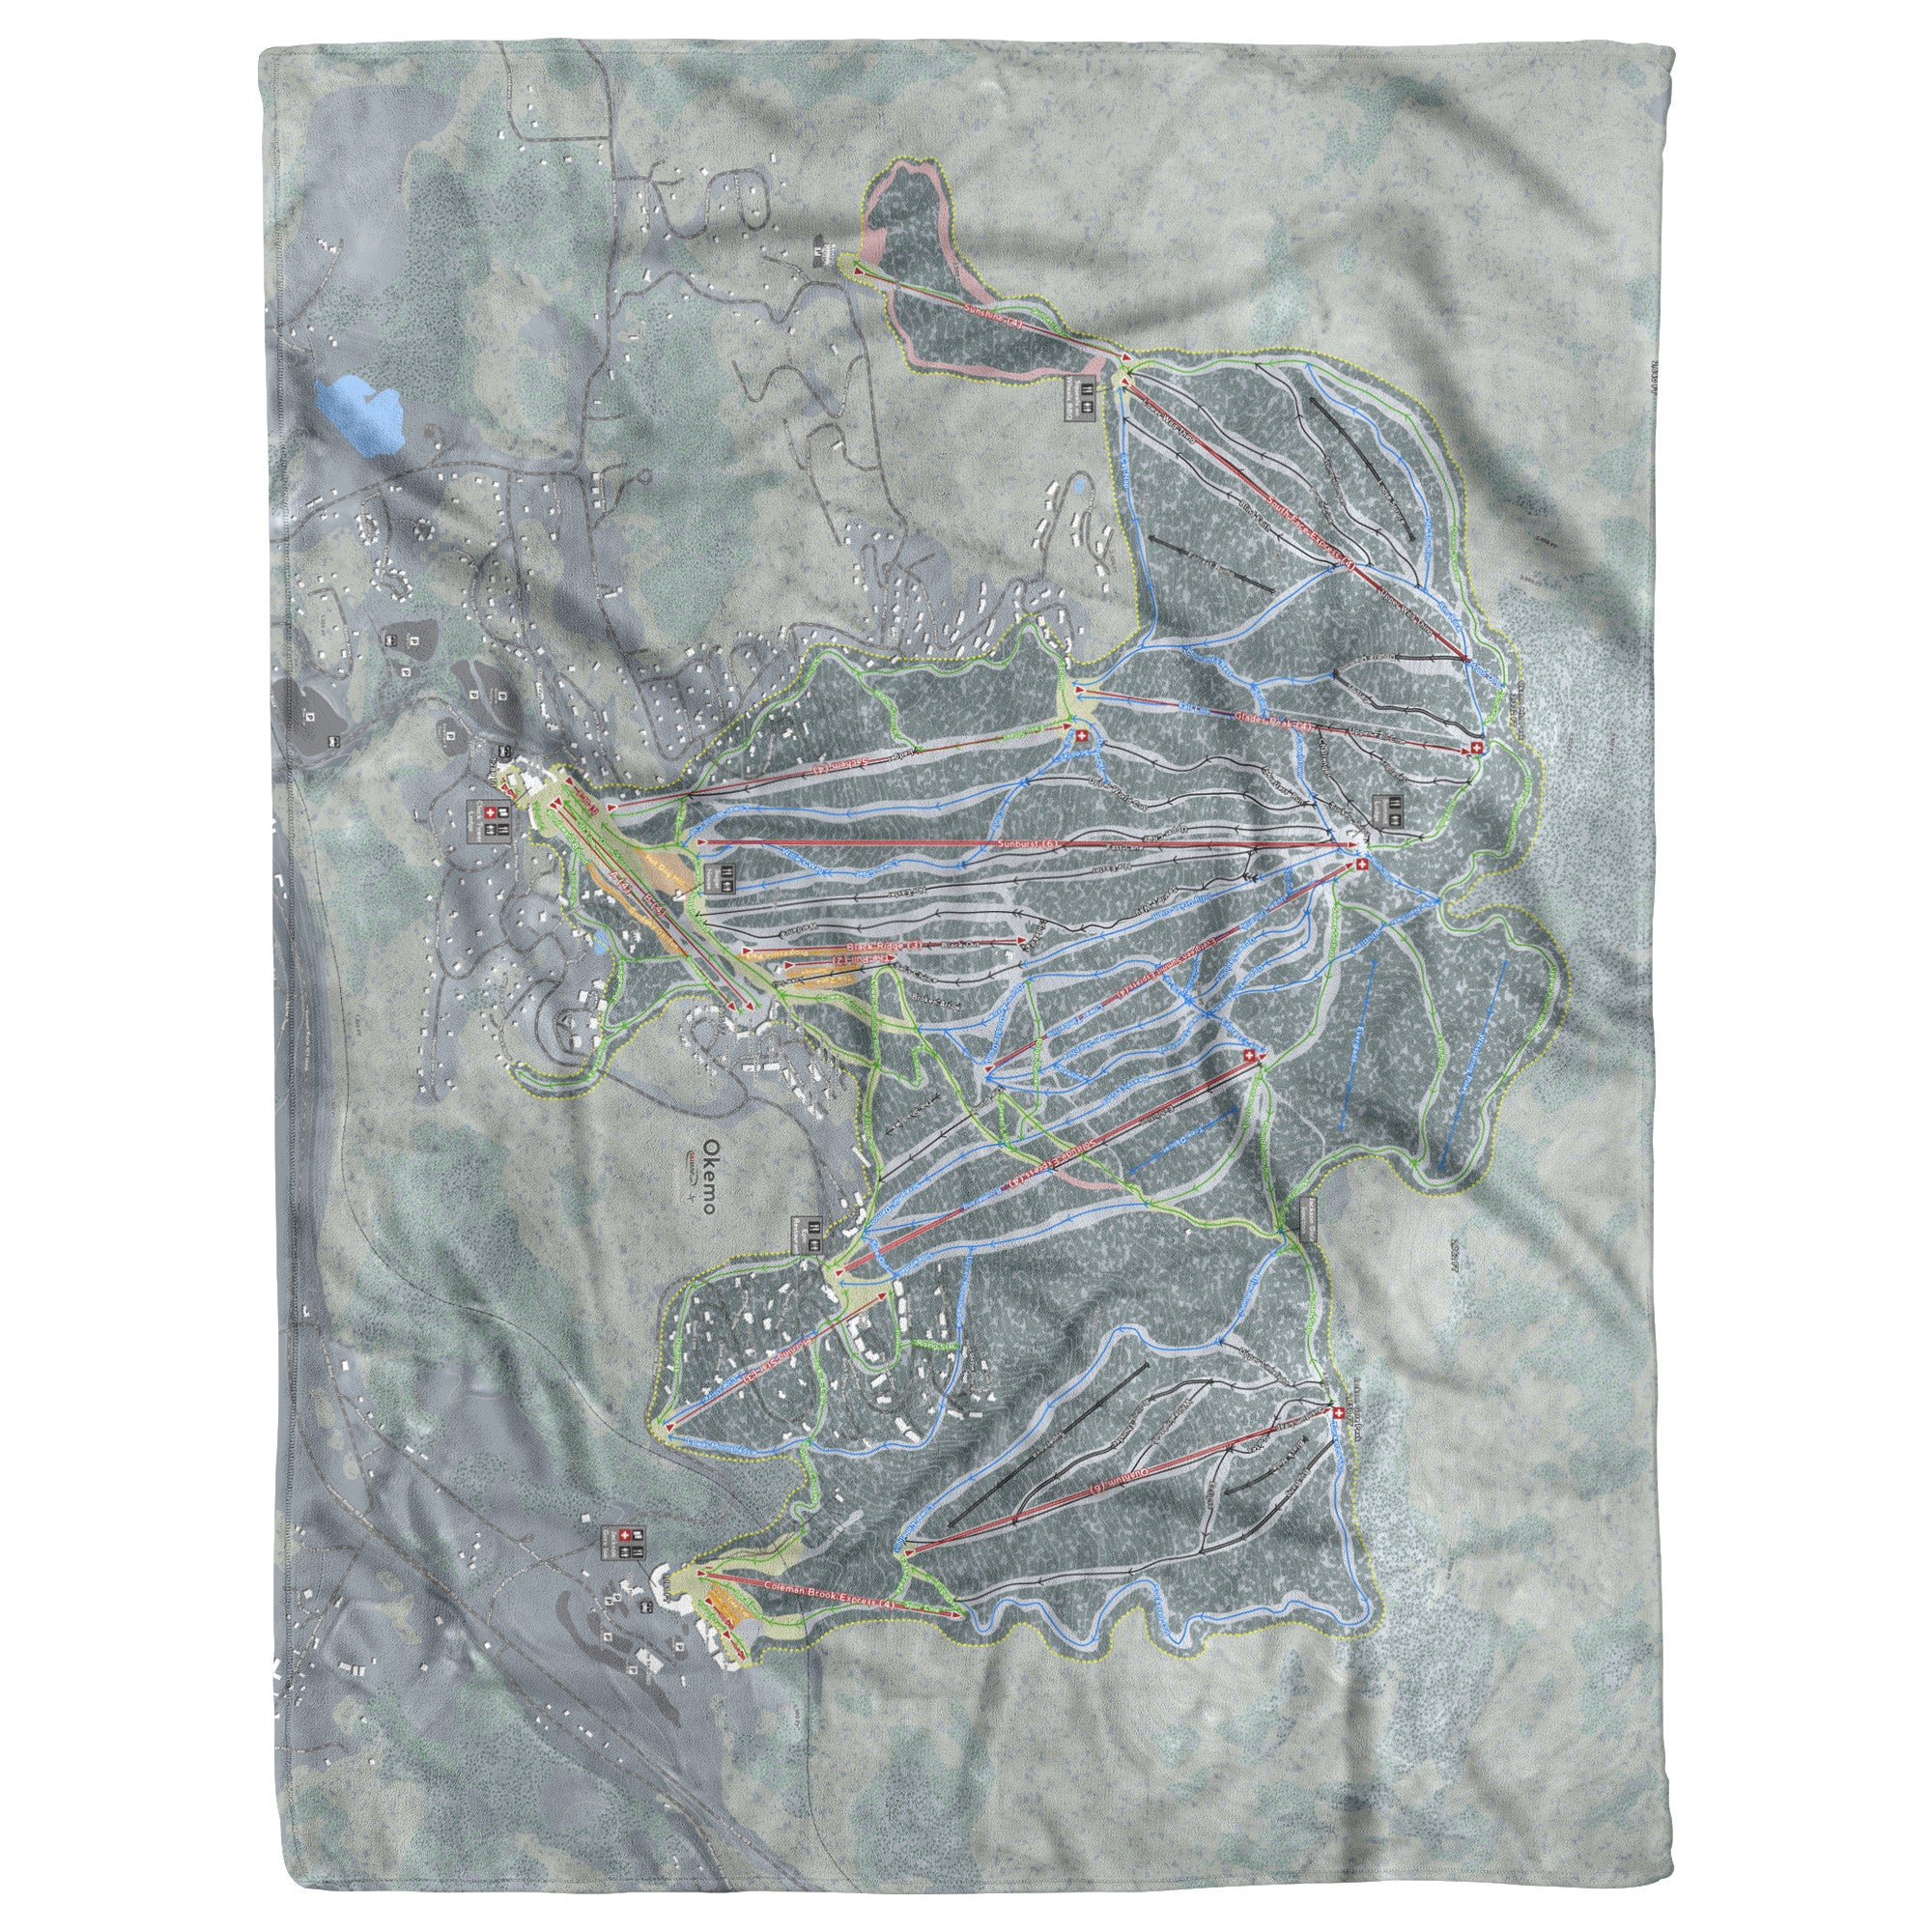 Okemo, Vermont Ski Resort Map Blanket